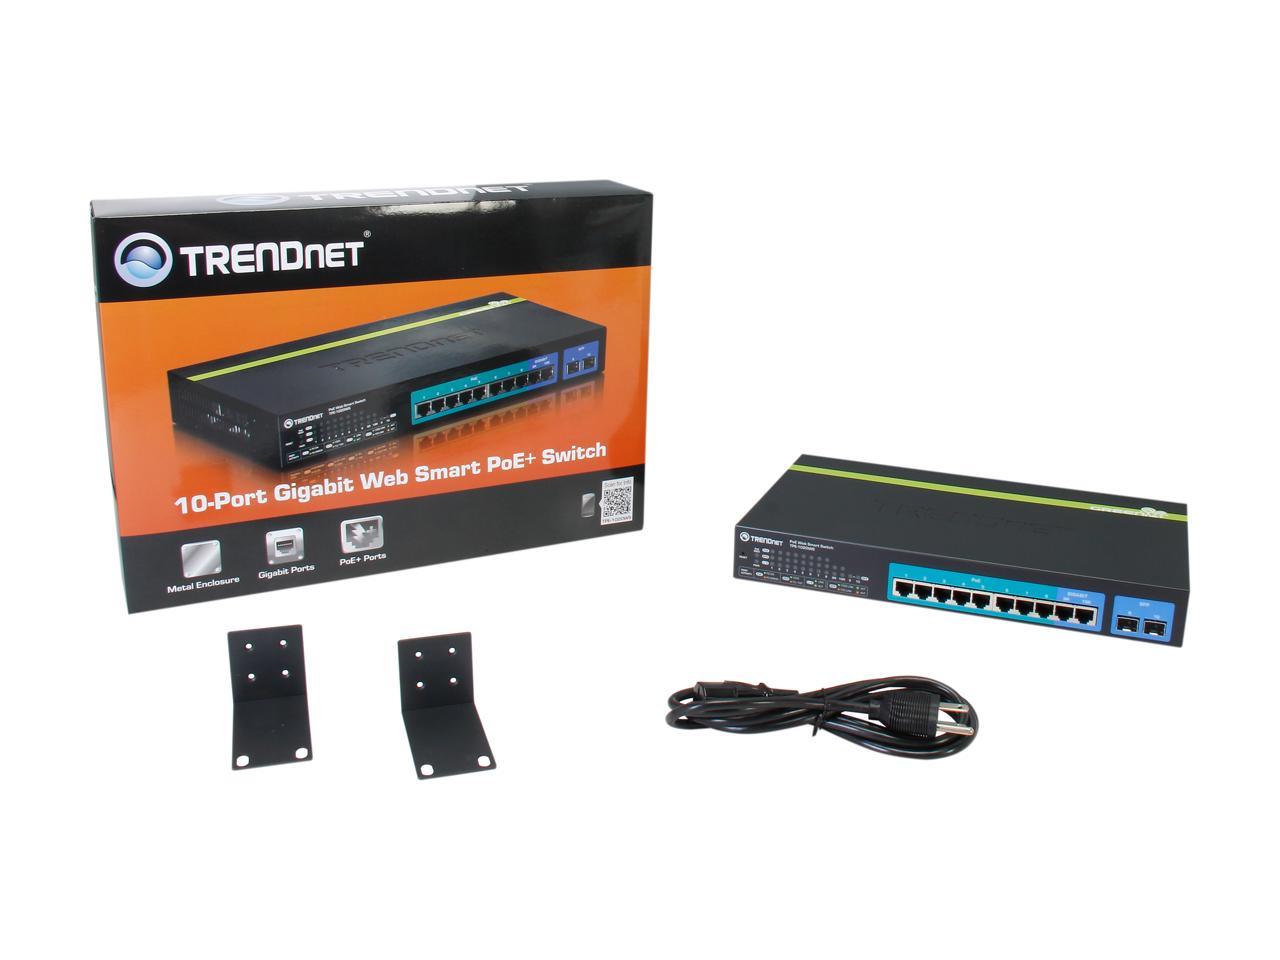 TRENDnet TPE-1020WS 10-Port Gigabit Web Smart PoE+ Switch. Limited Life Time Warranty